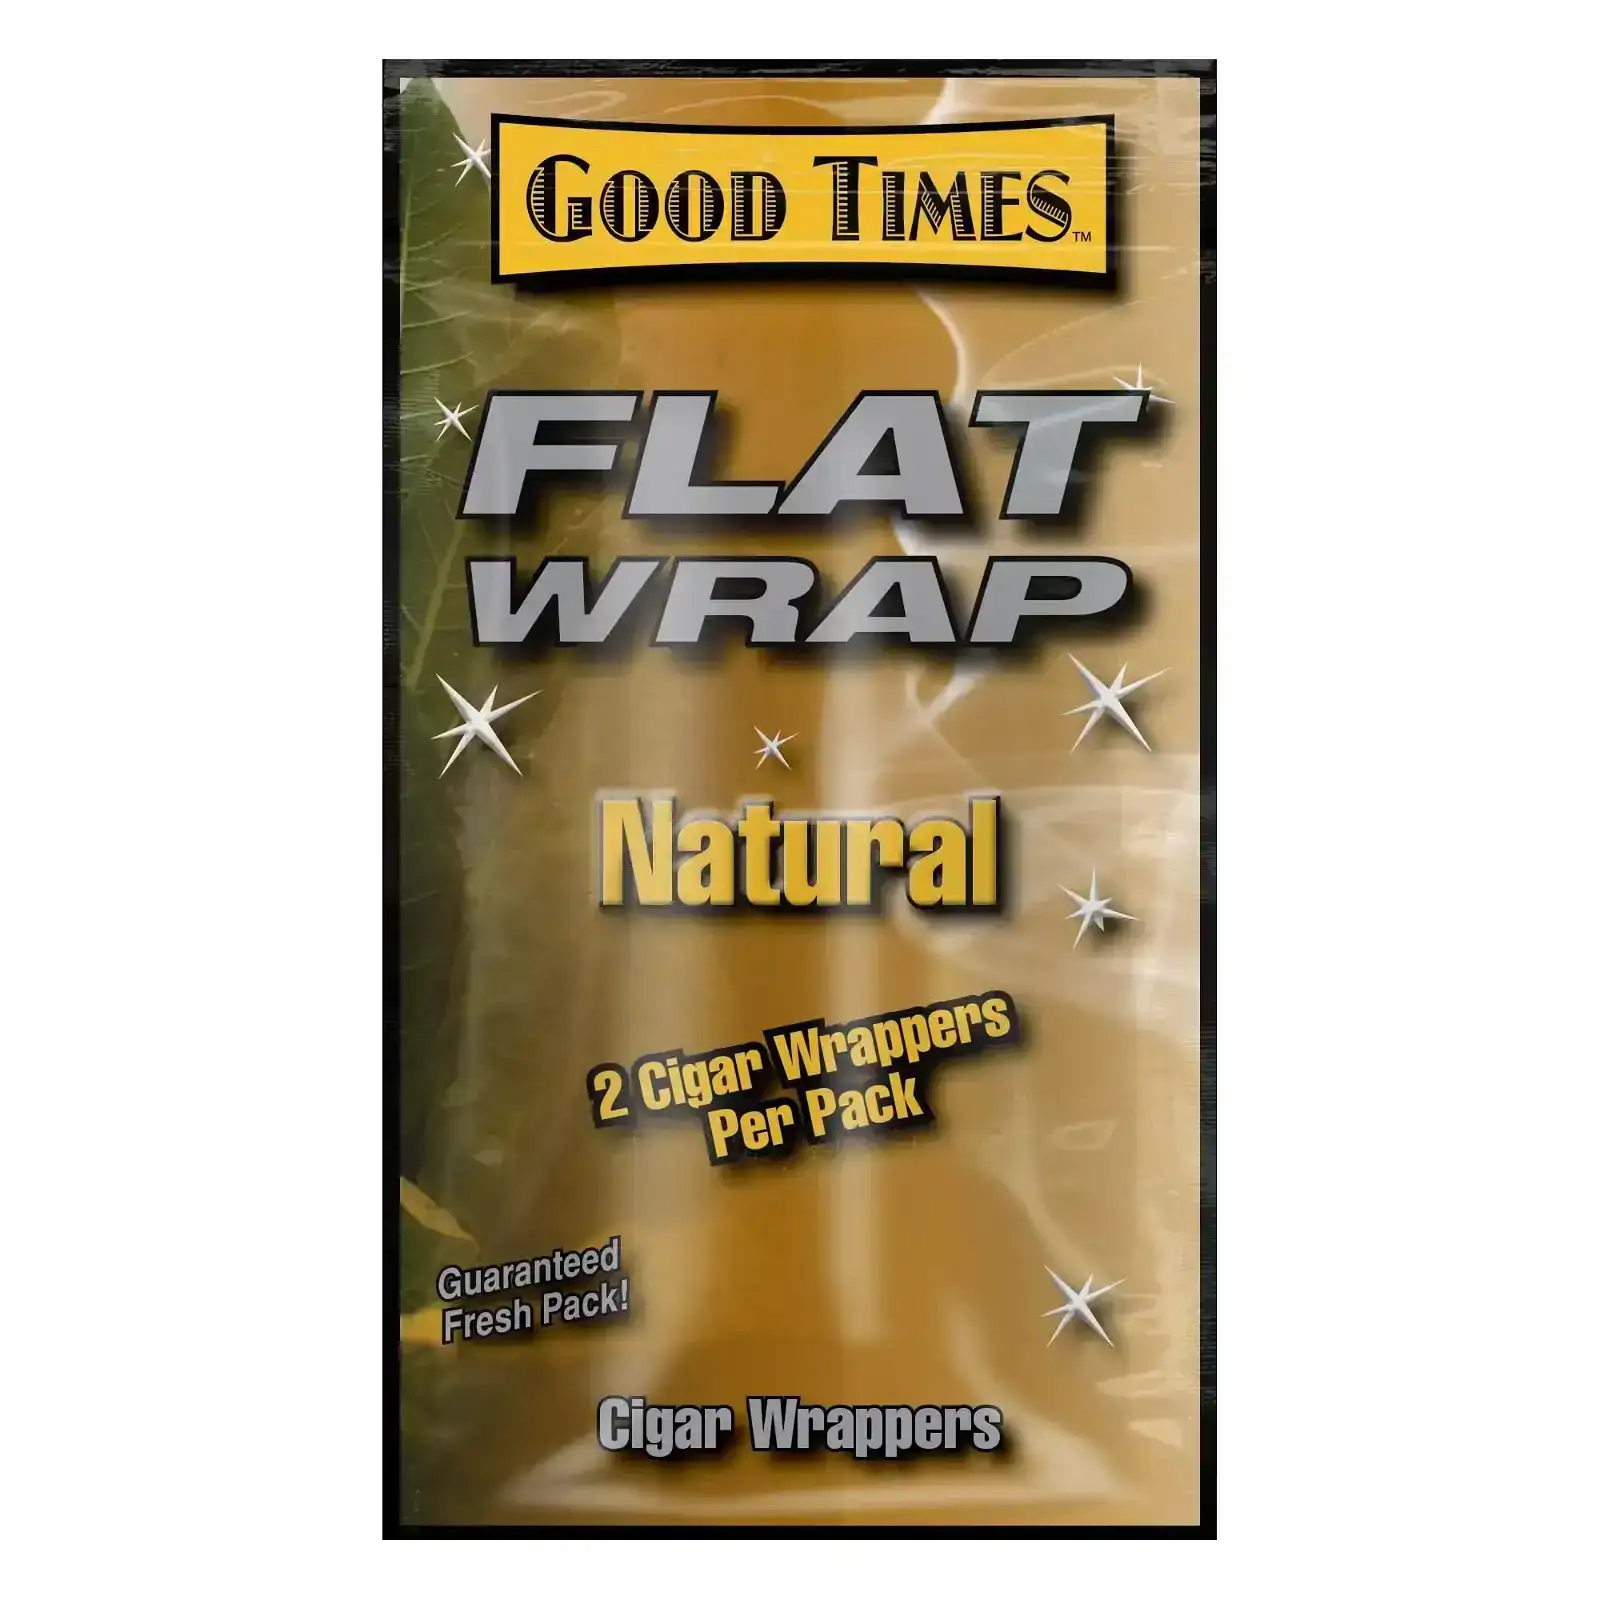 Good Times Natural Flat Wraps